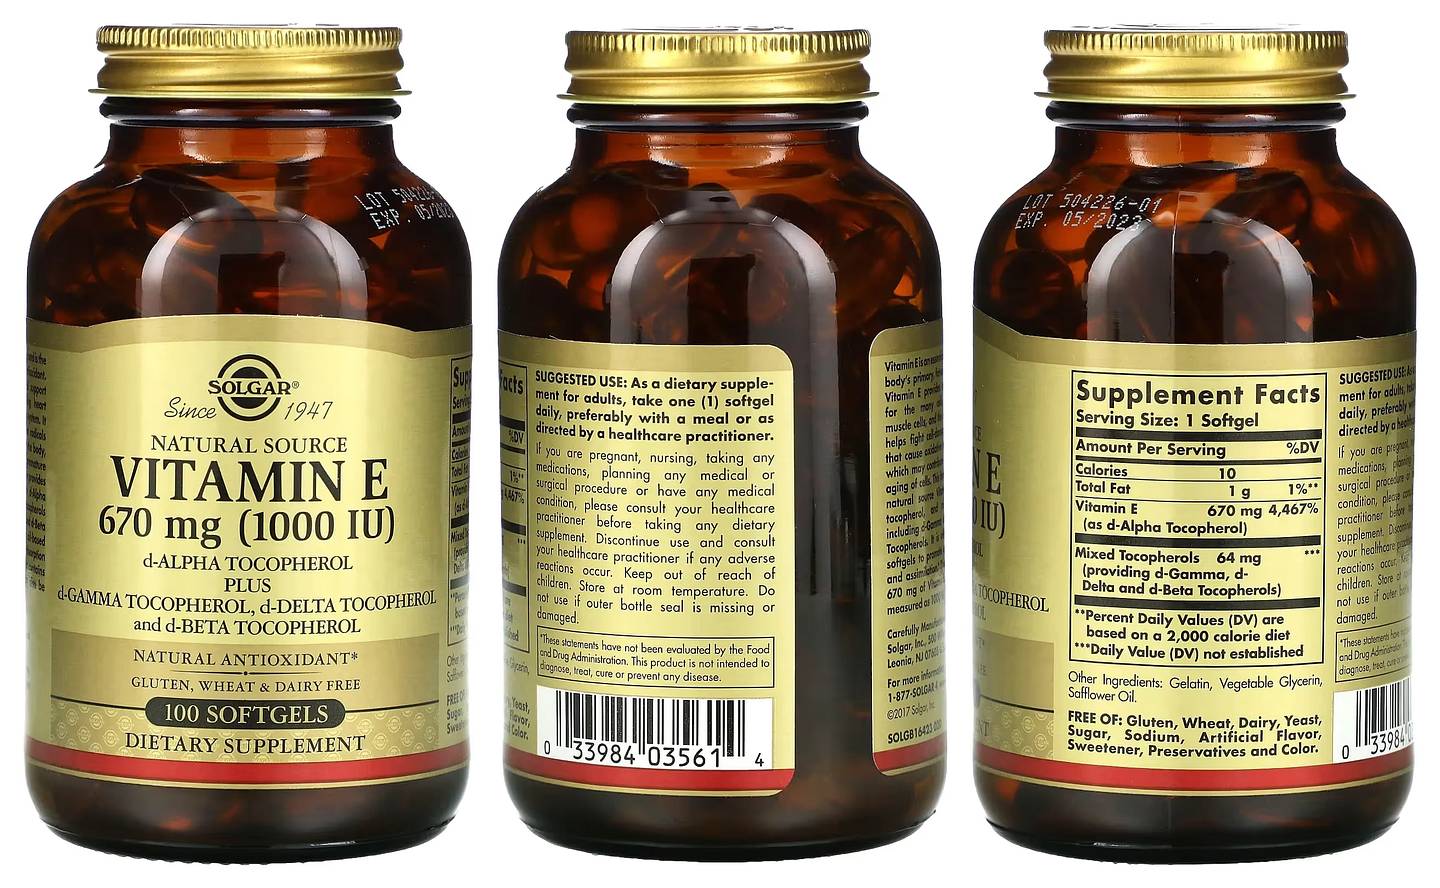 Solgar, Natural Source Vitamin E packaging